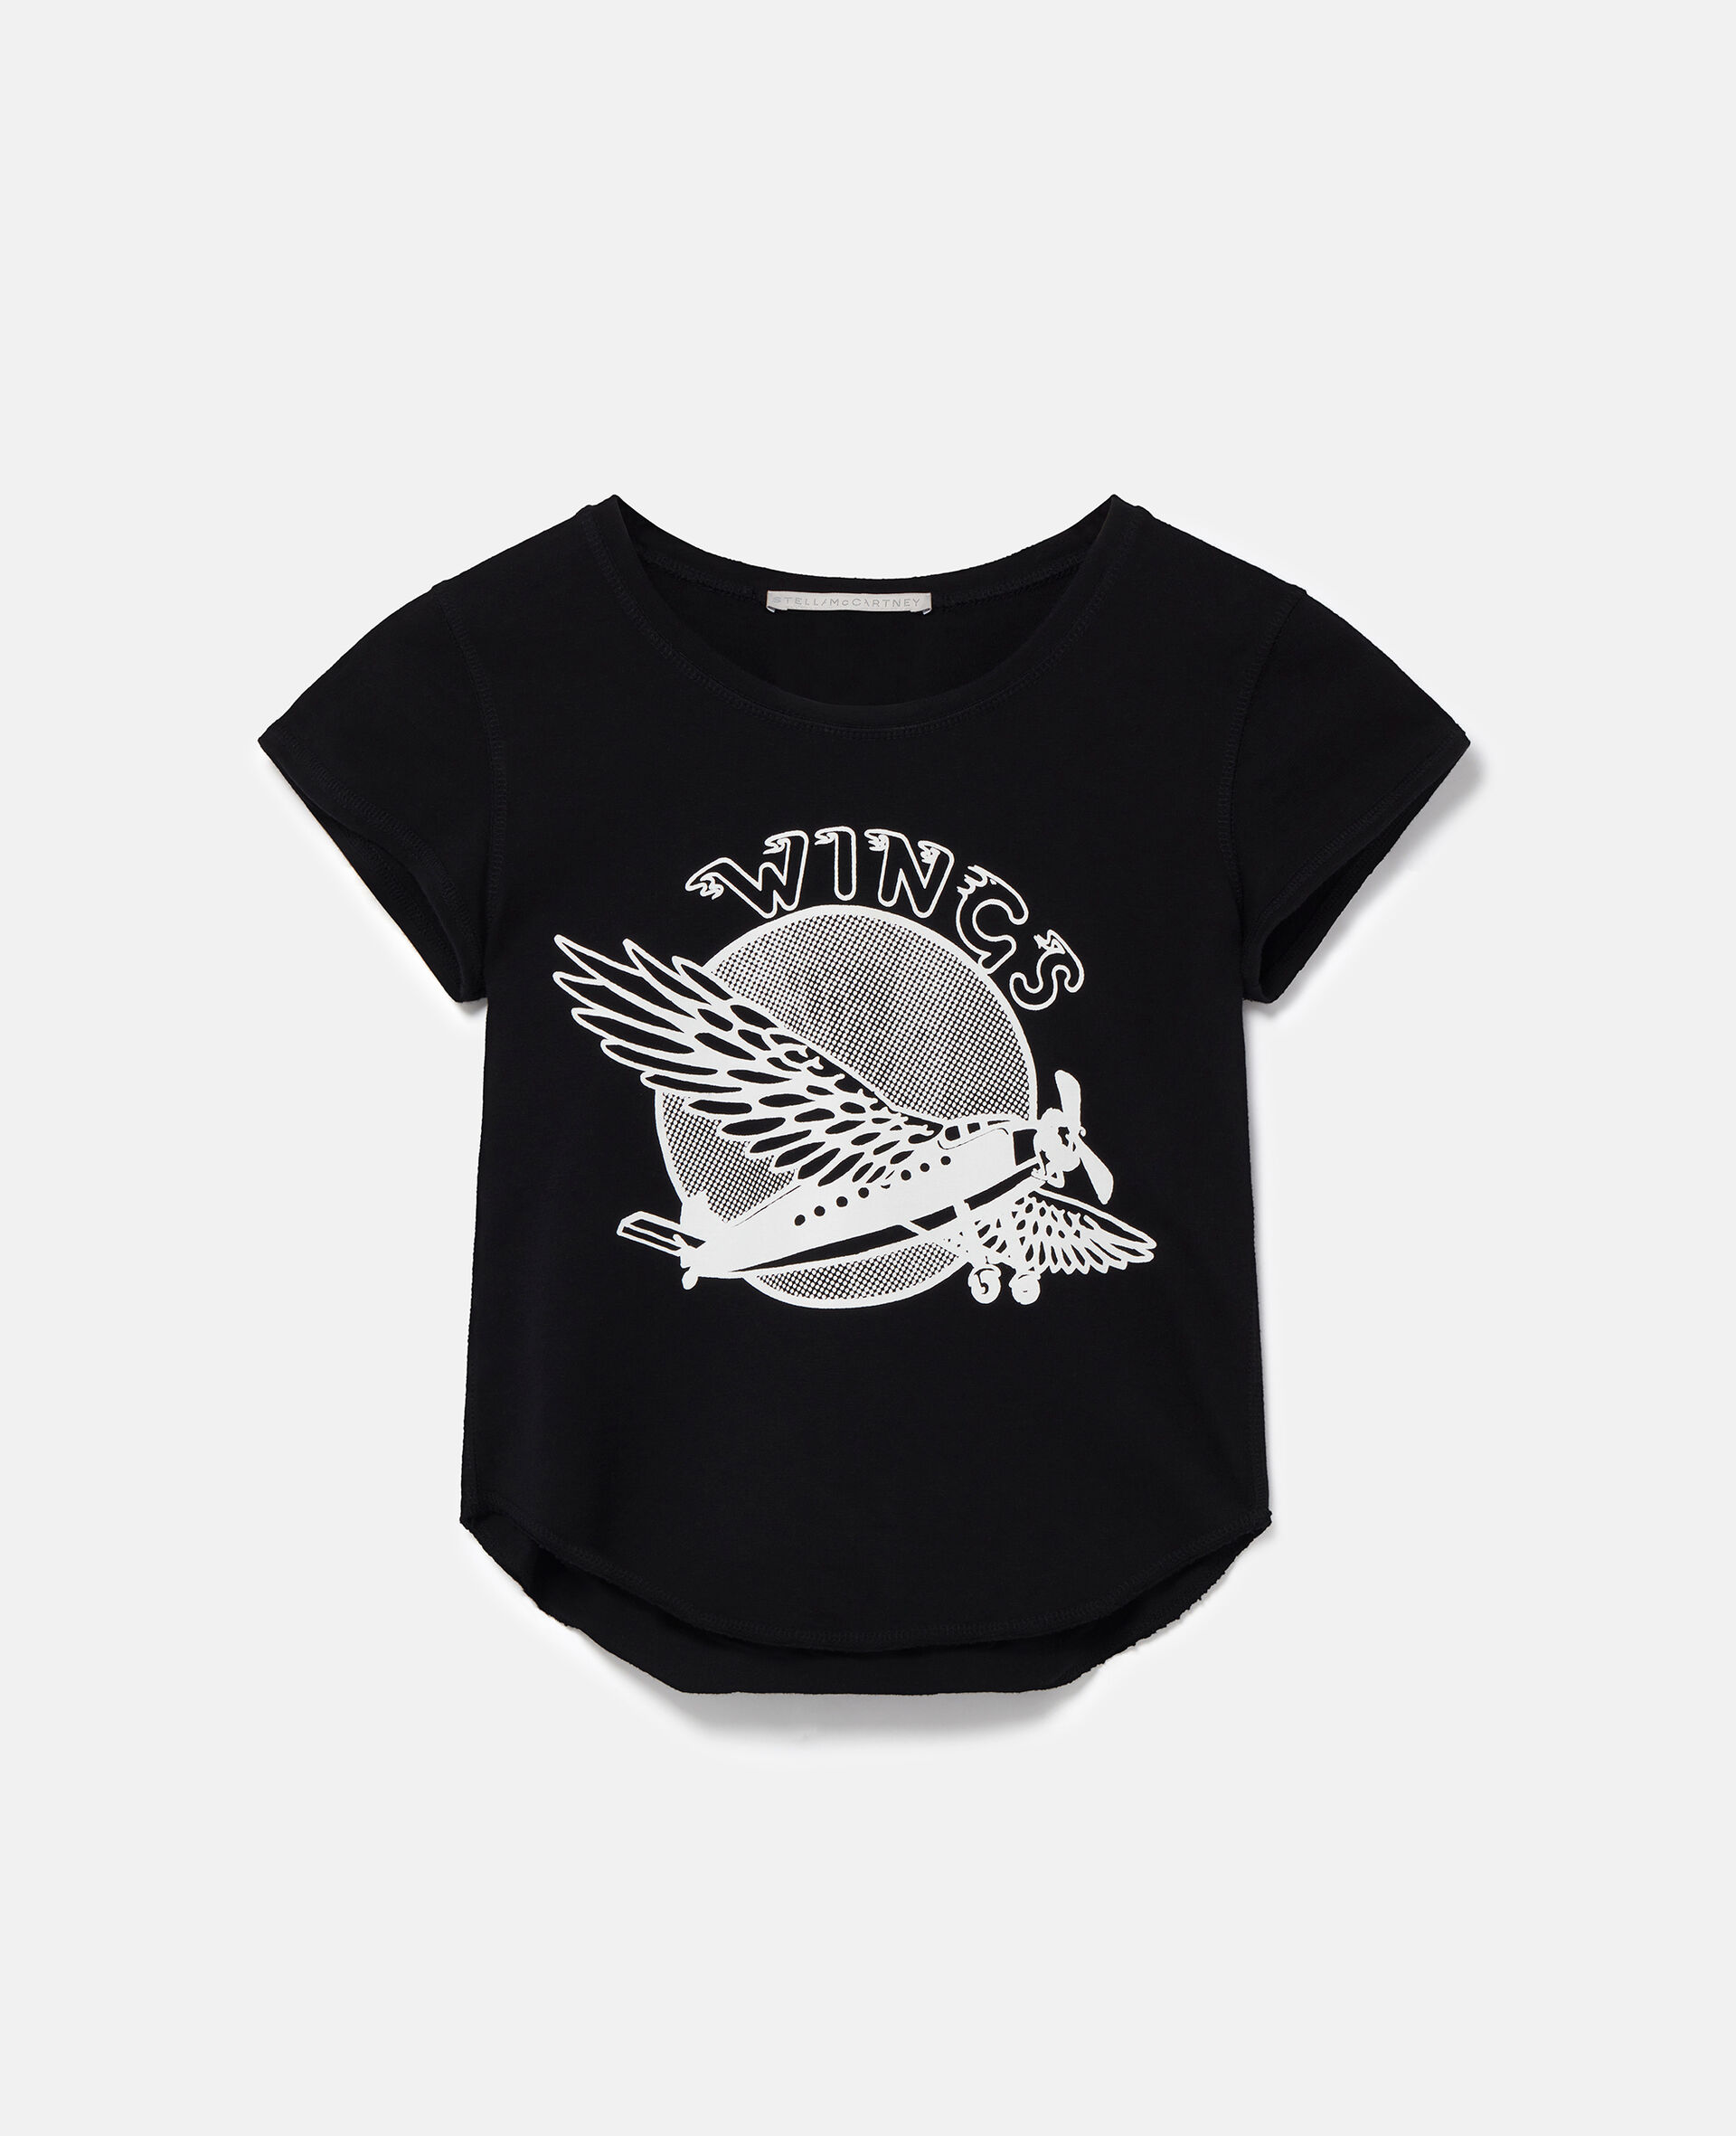 翅膀图案棉质婴儿T恤-黑色-large image number 0